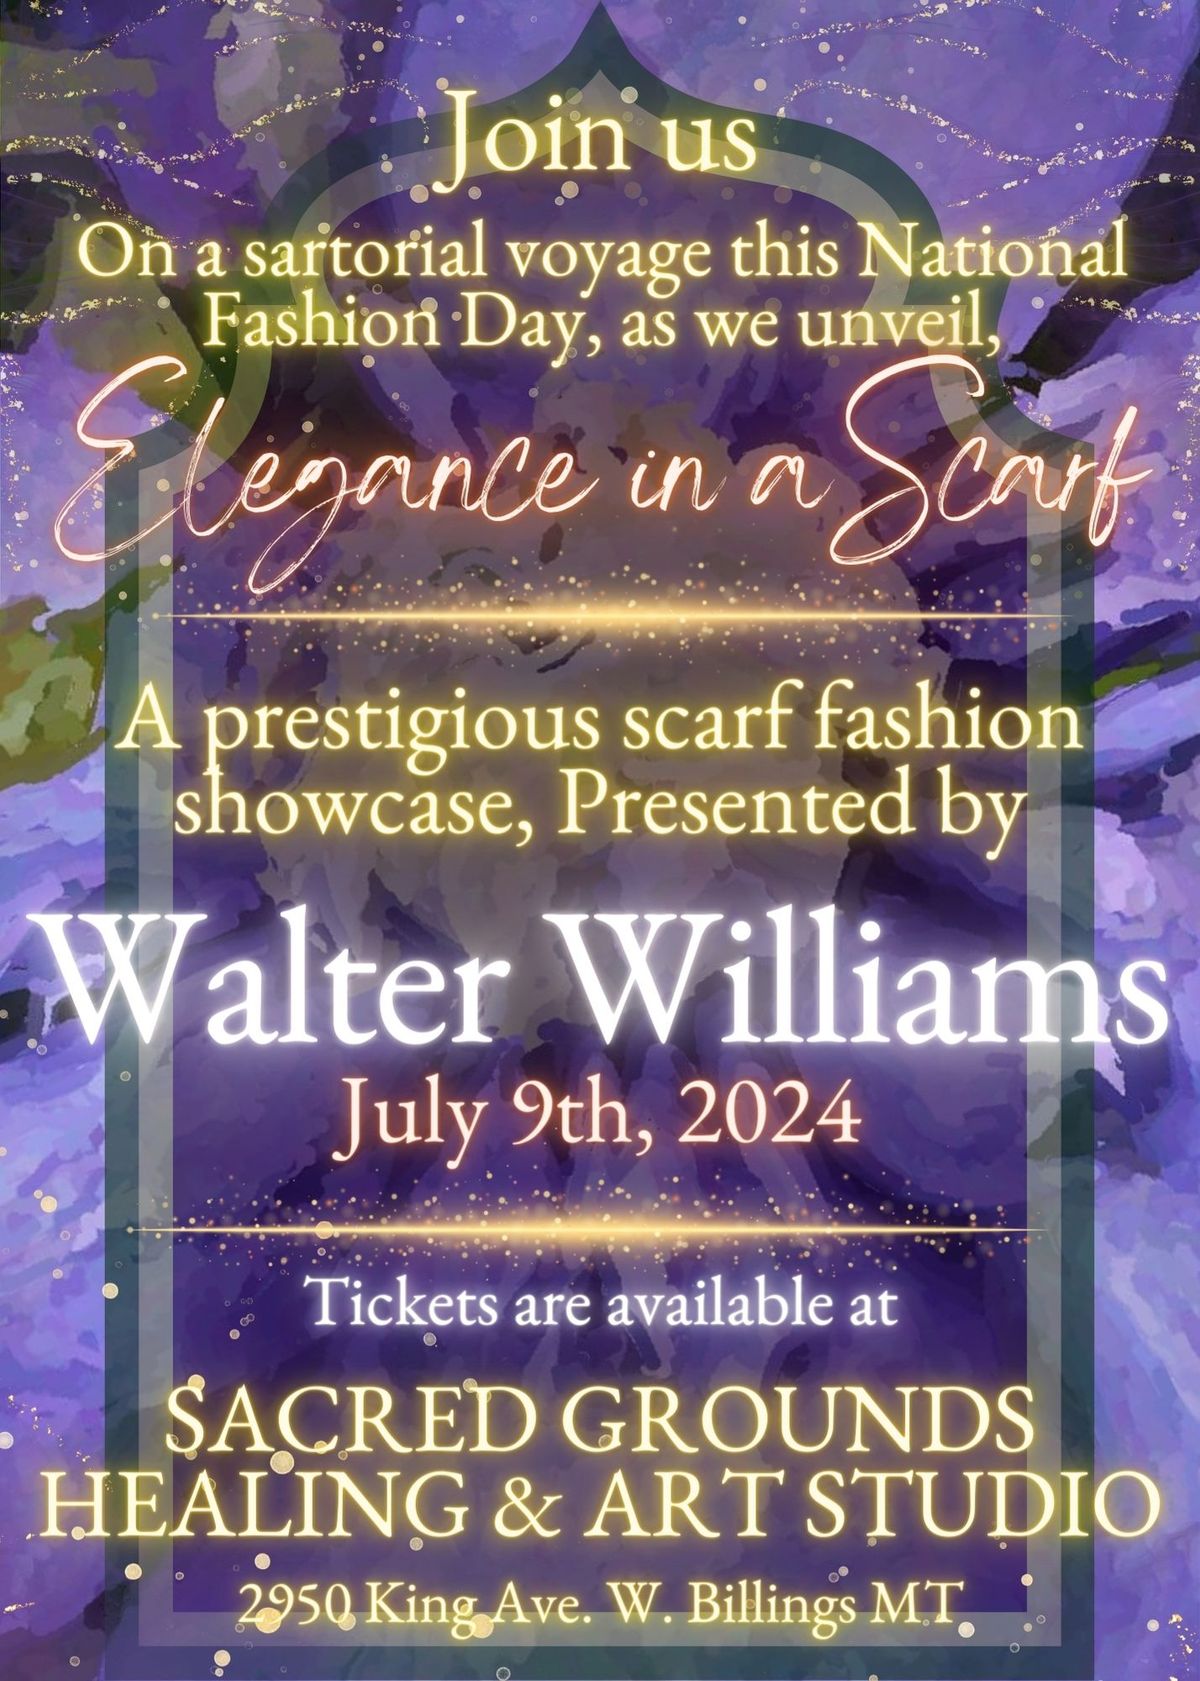 Elegance in a Scarf by Walter Williams